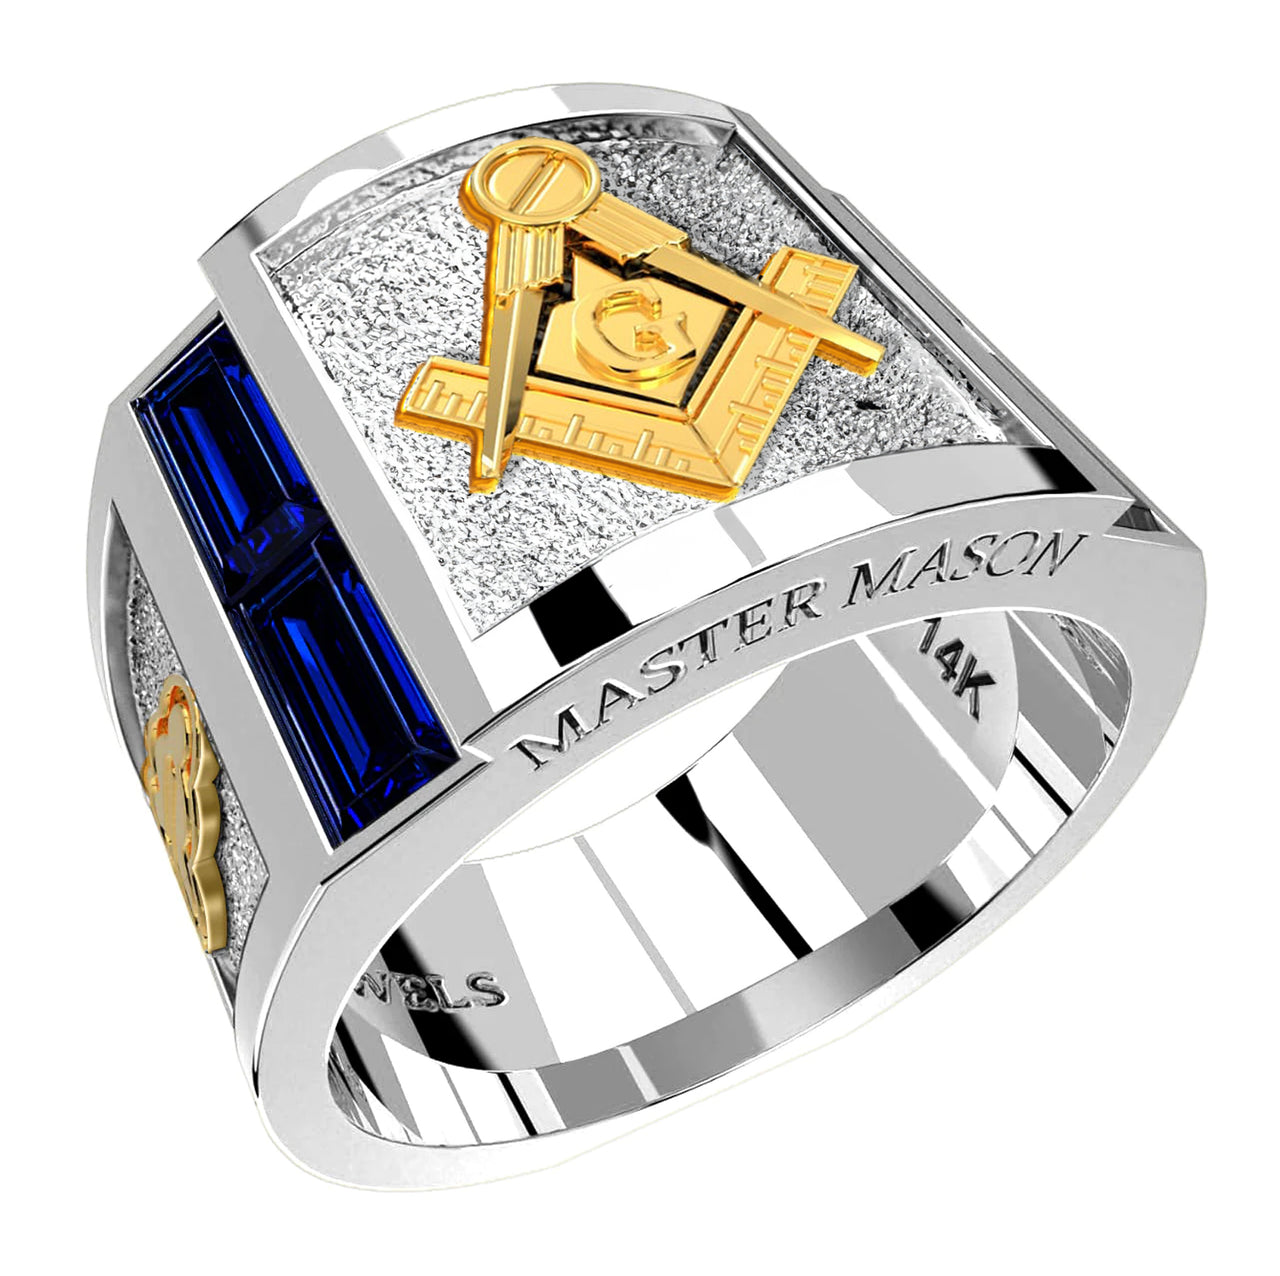 Men's High Polish 10K  or 14K White Gold Master Mason Freemason Masonic Ring